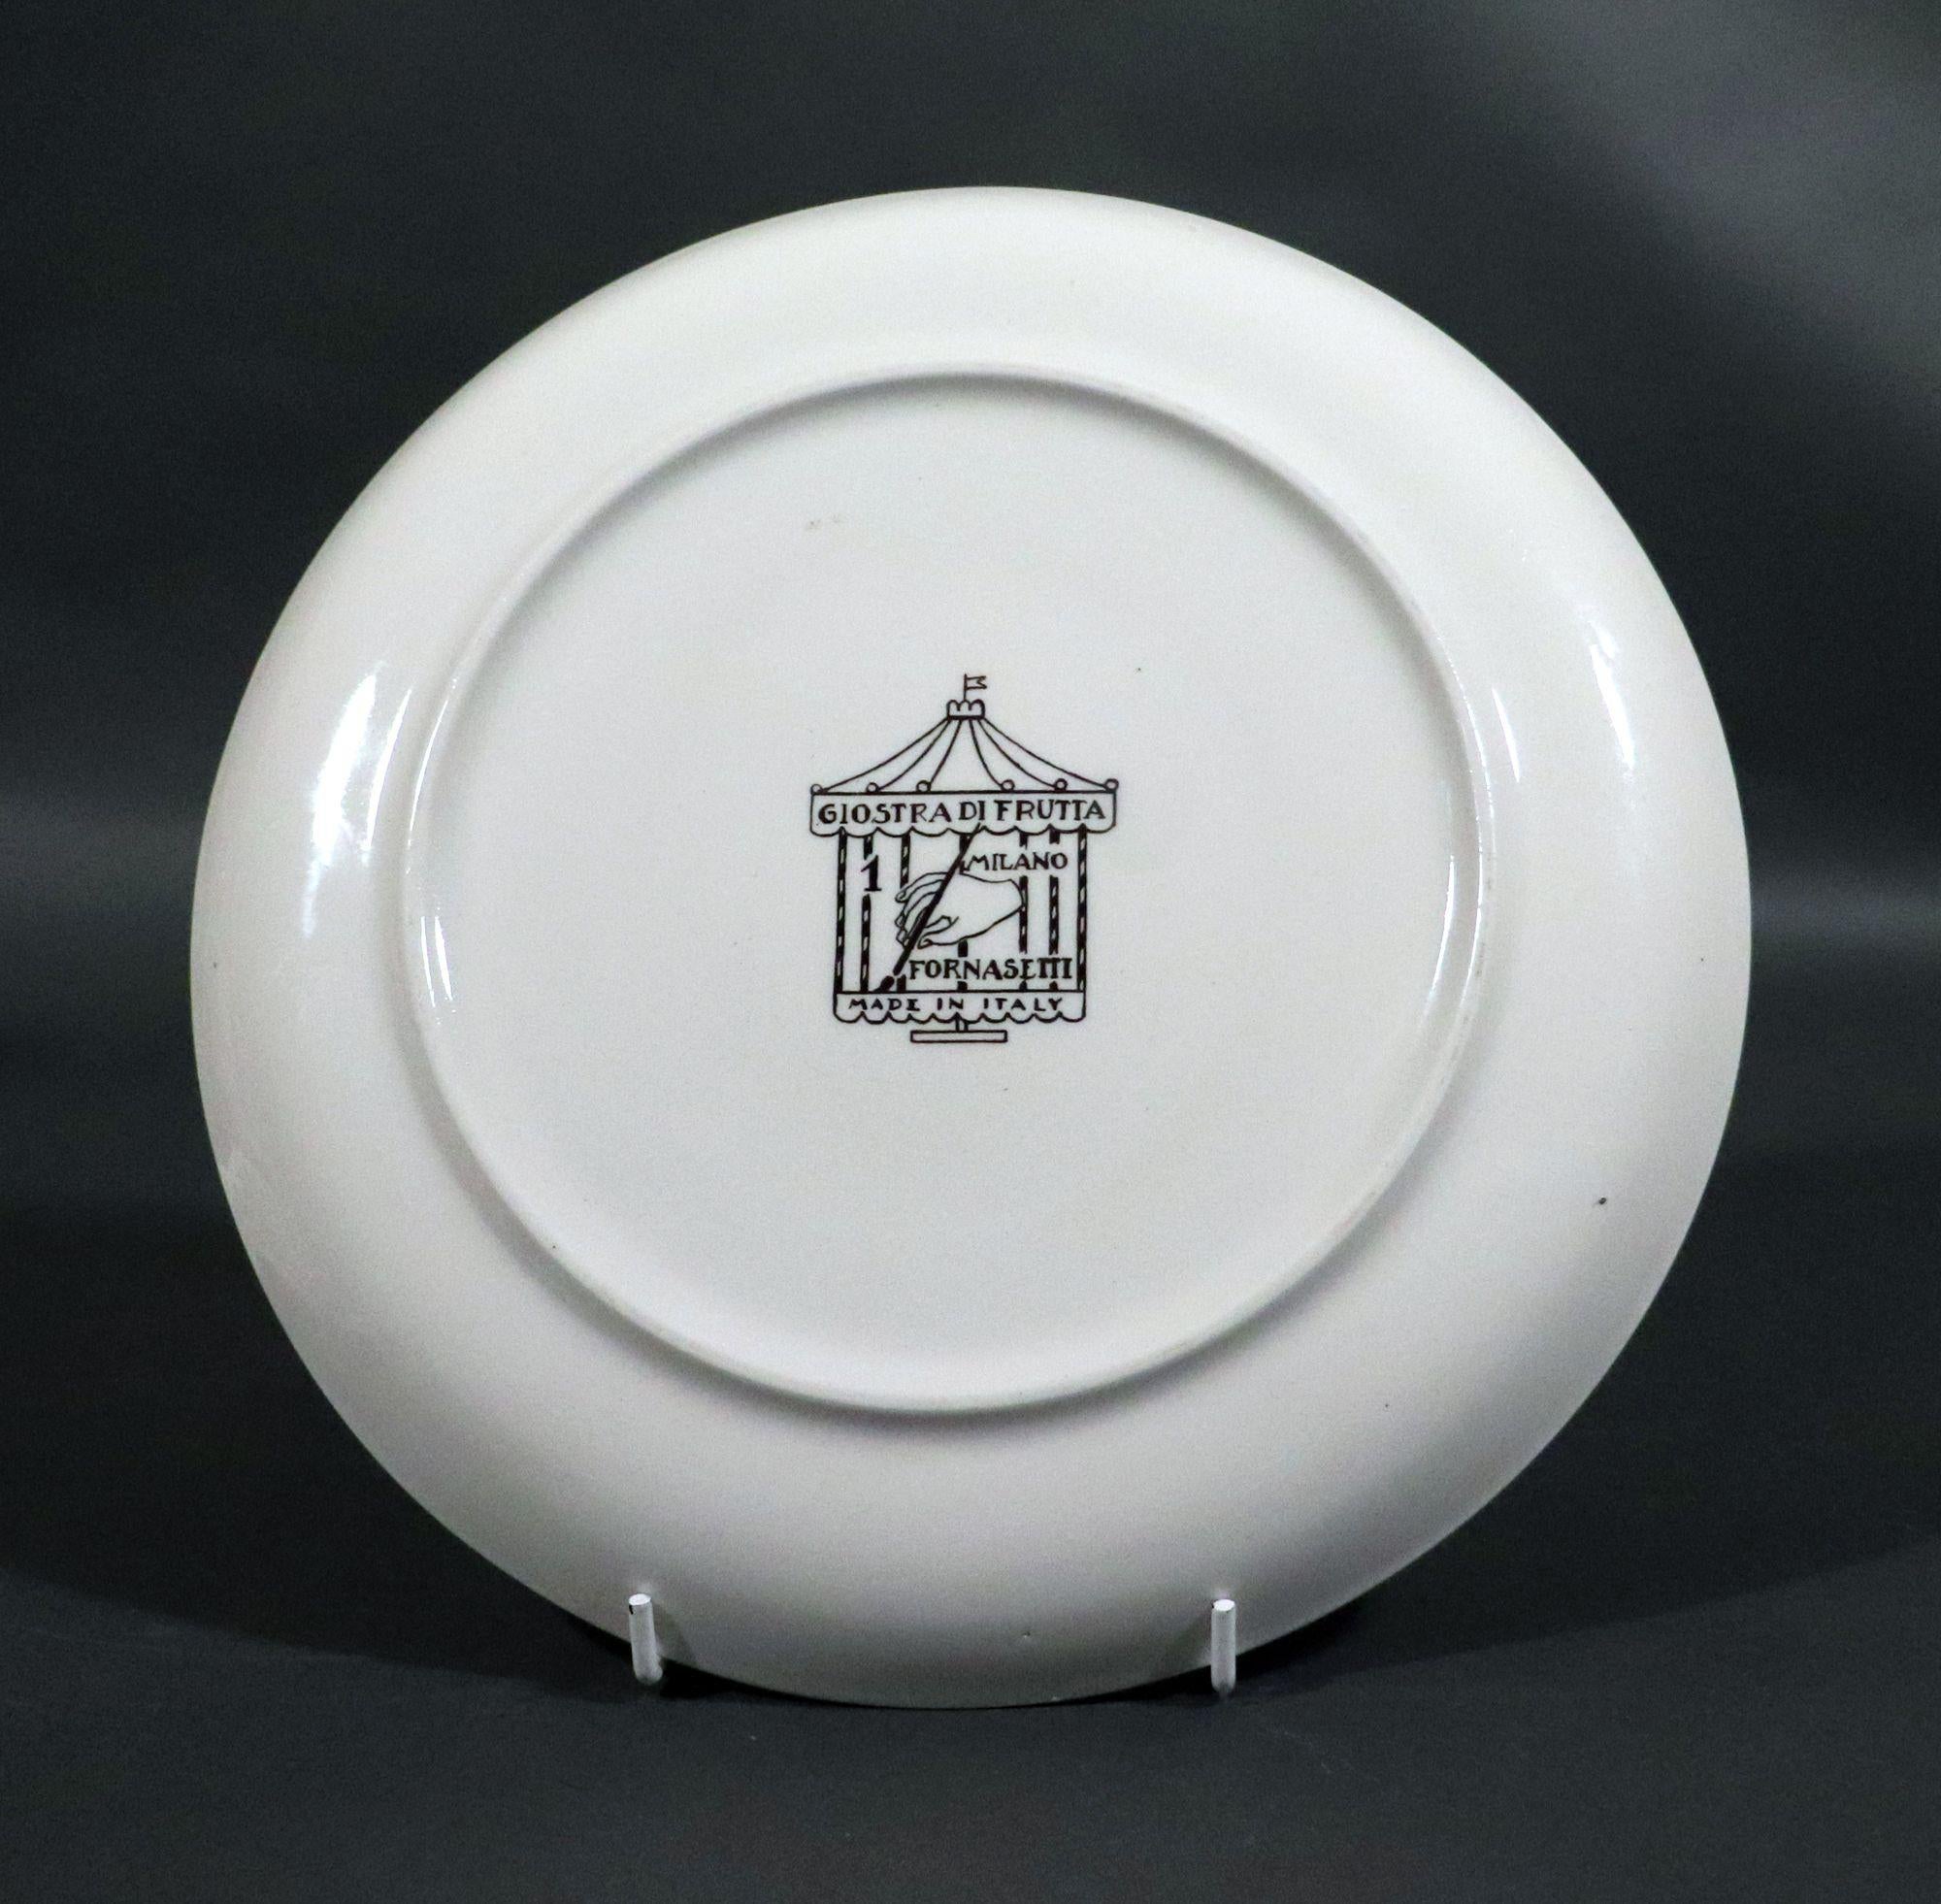 Piero Fornasetti Porcelain Plates, Giostra di Frutta (Merry-go-Round of Fruit) For Sale 12